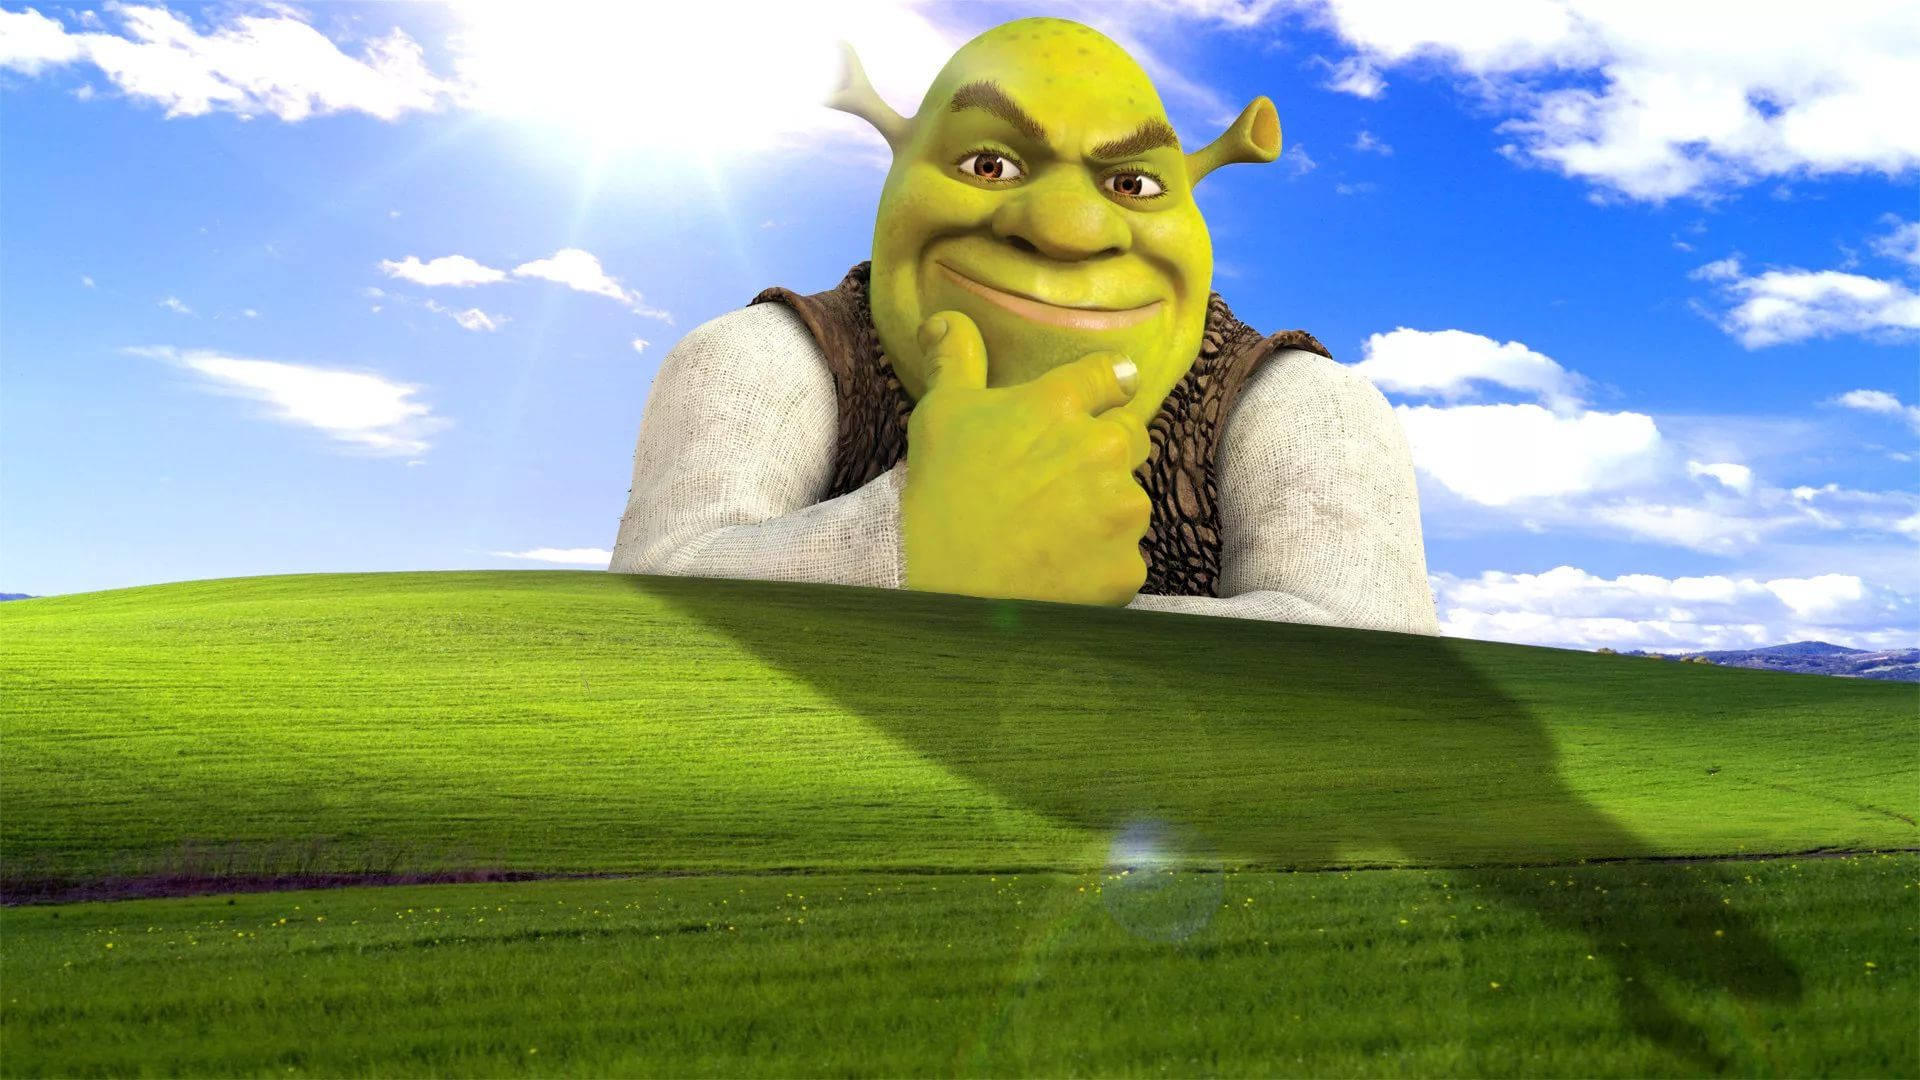 Shrek showing a cool guy posture in windows XP desktop background, funny meme.